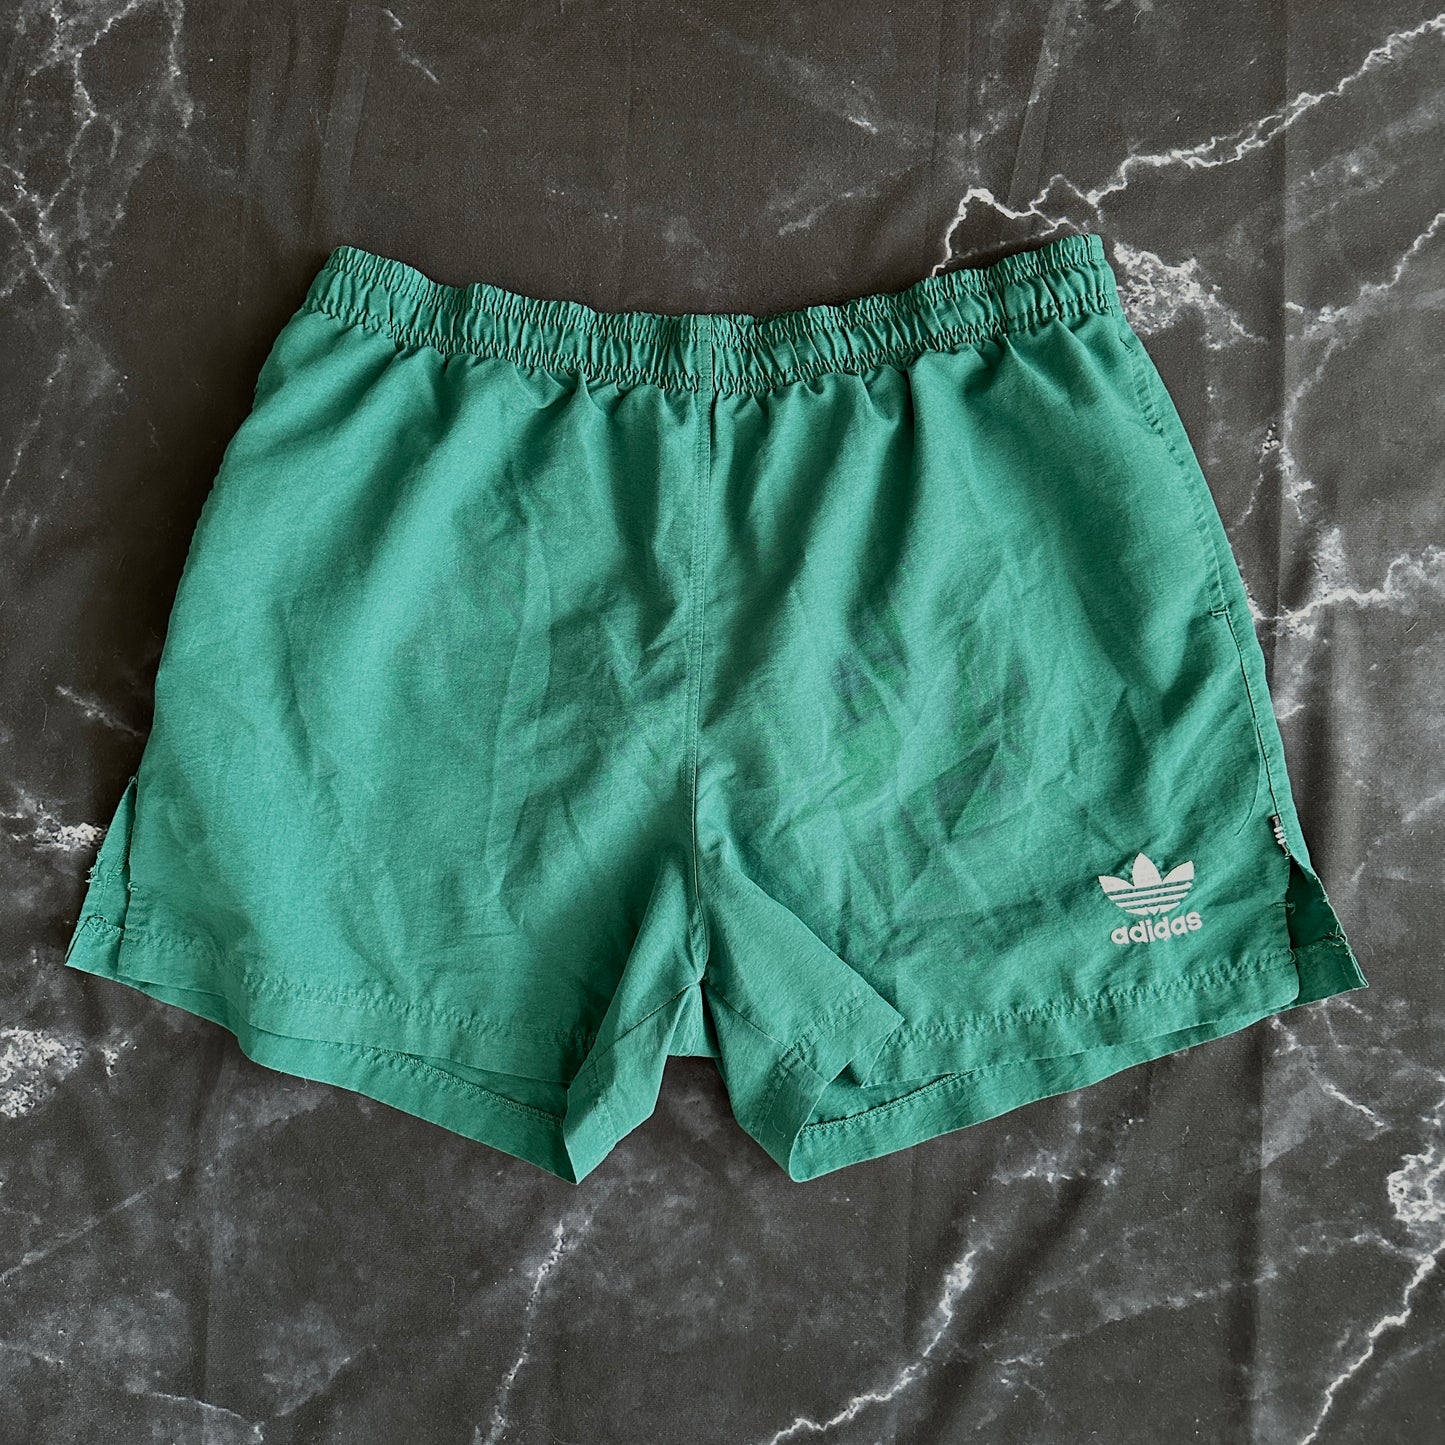 Adidas Vintage 90s Shorts - Green - XL